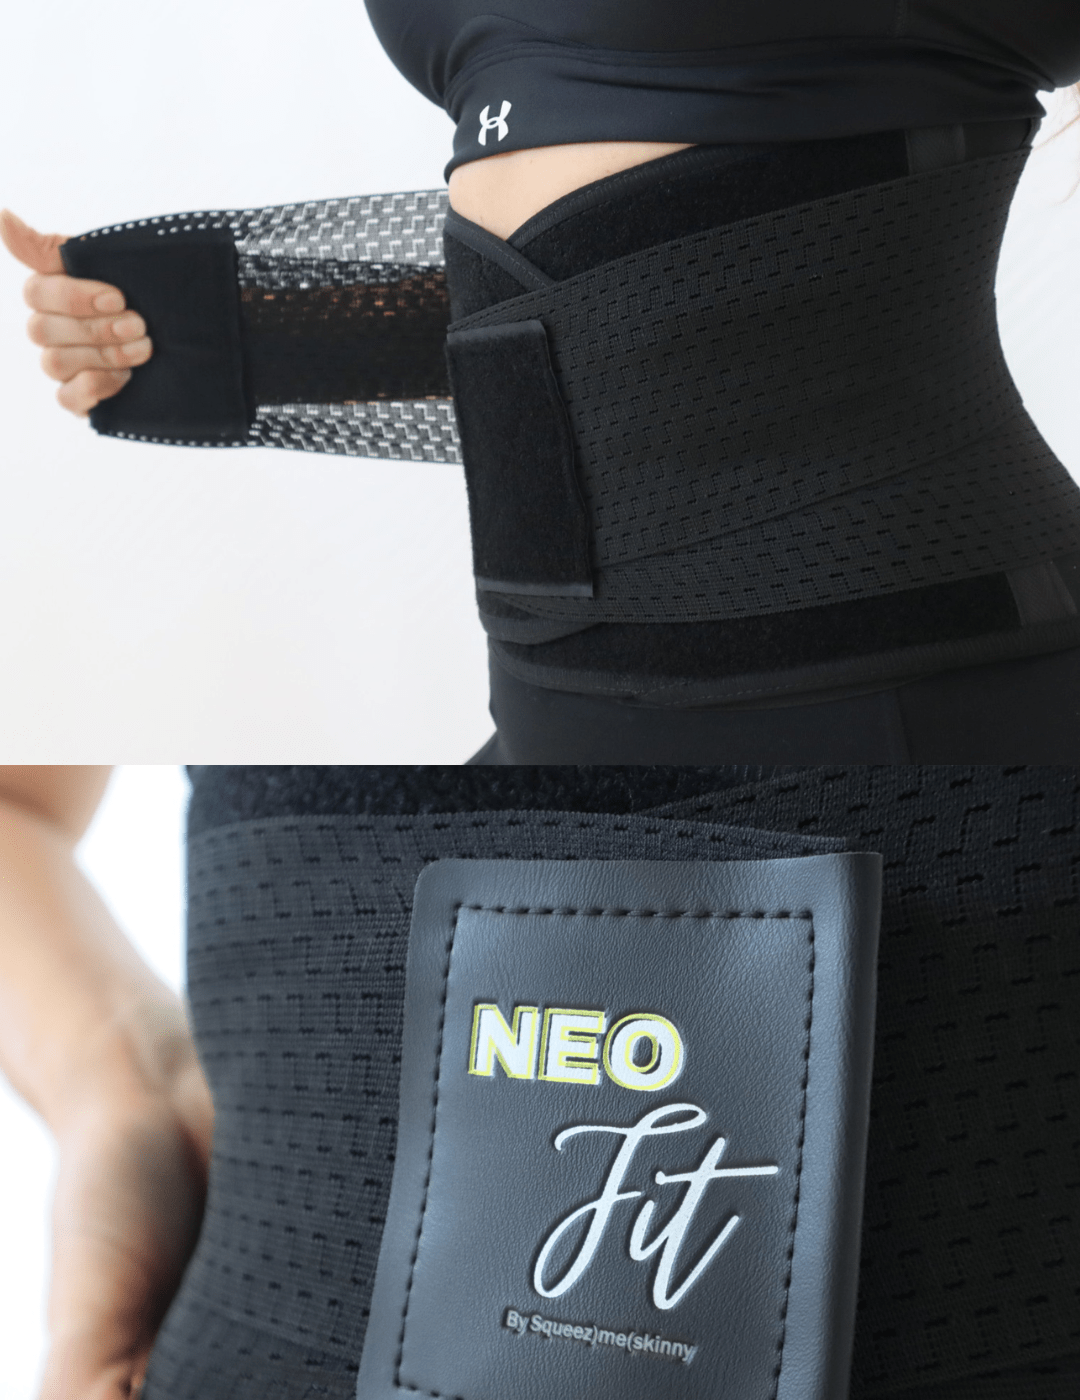  Skelcore Workout Sweatband Belt - Neoprene Waist